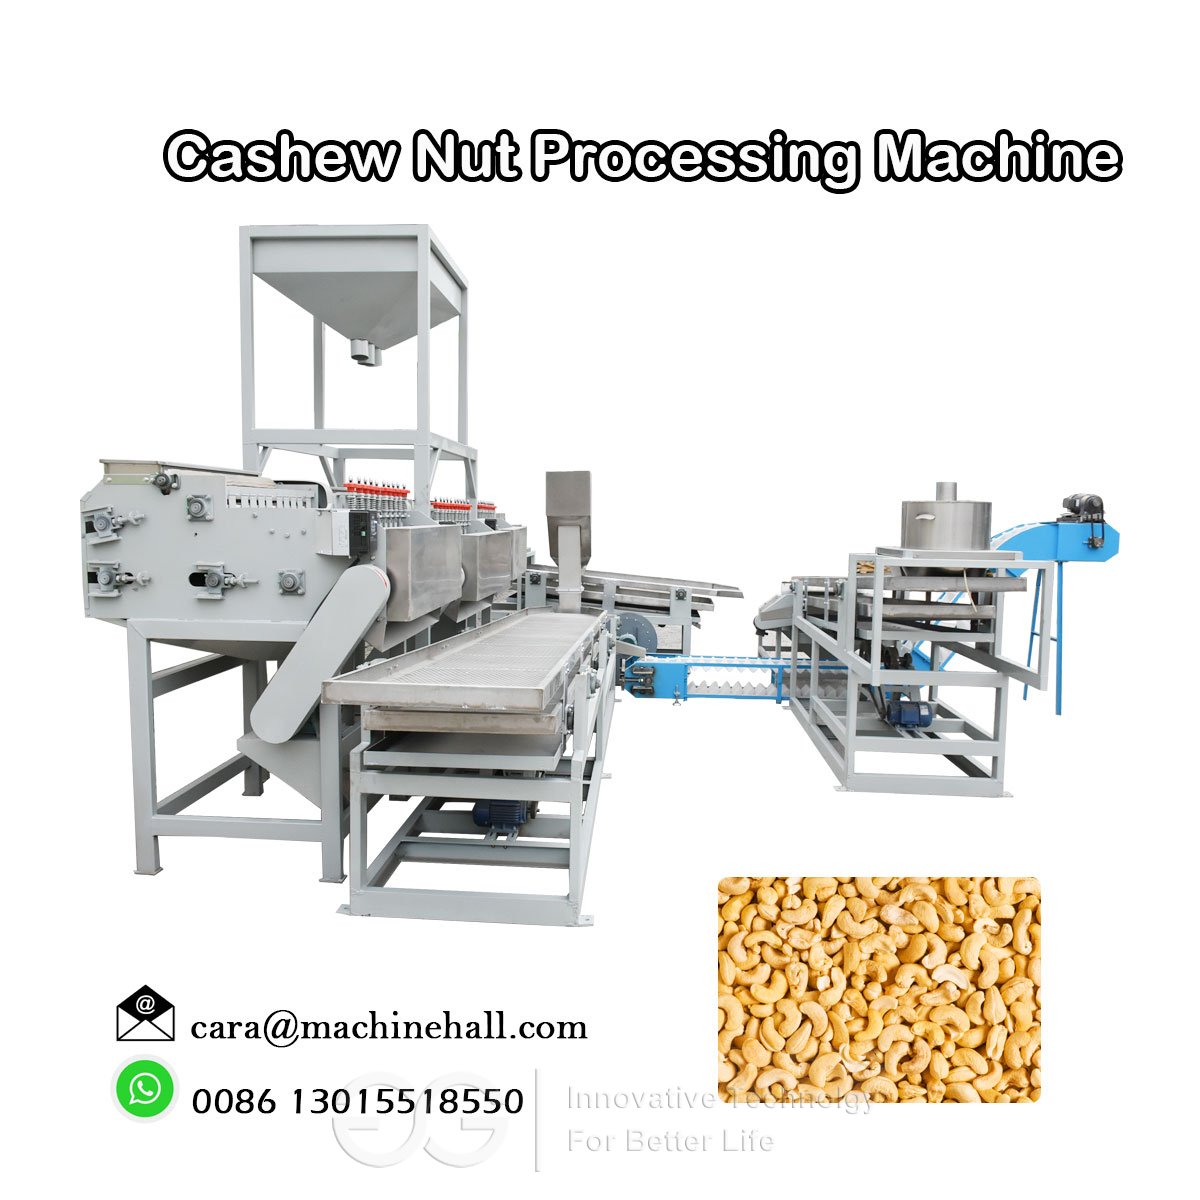 Cashew nut Processing Machine Price